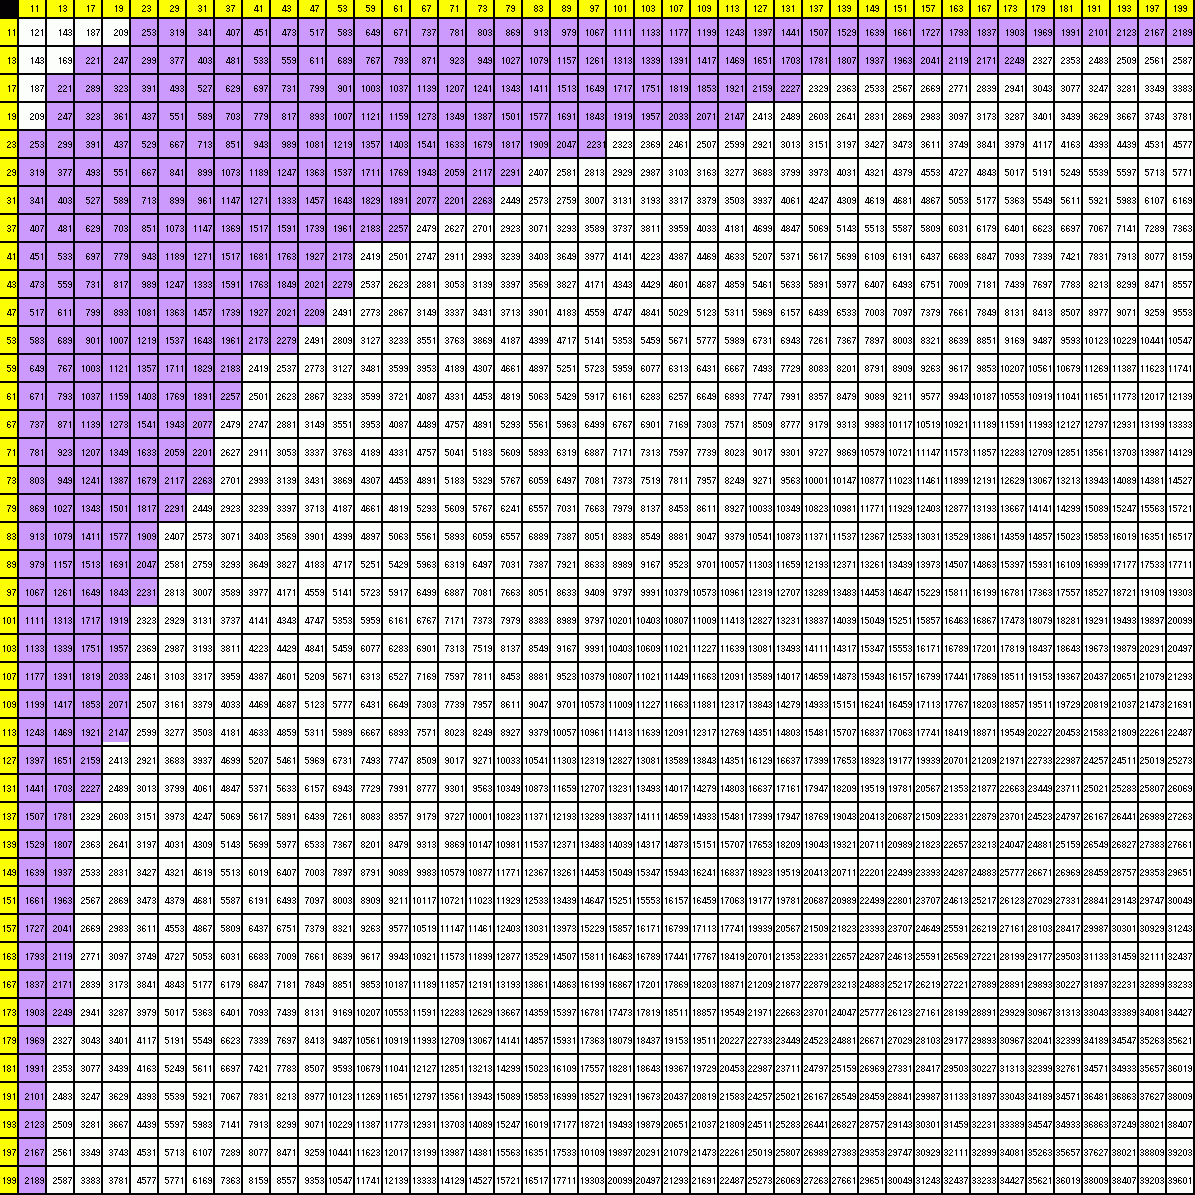 Appendix B - [ 42 X 42 Multiplication Table ]